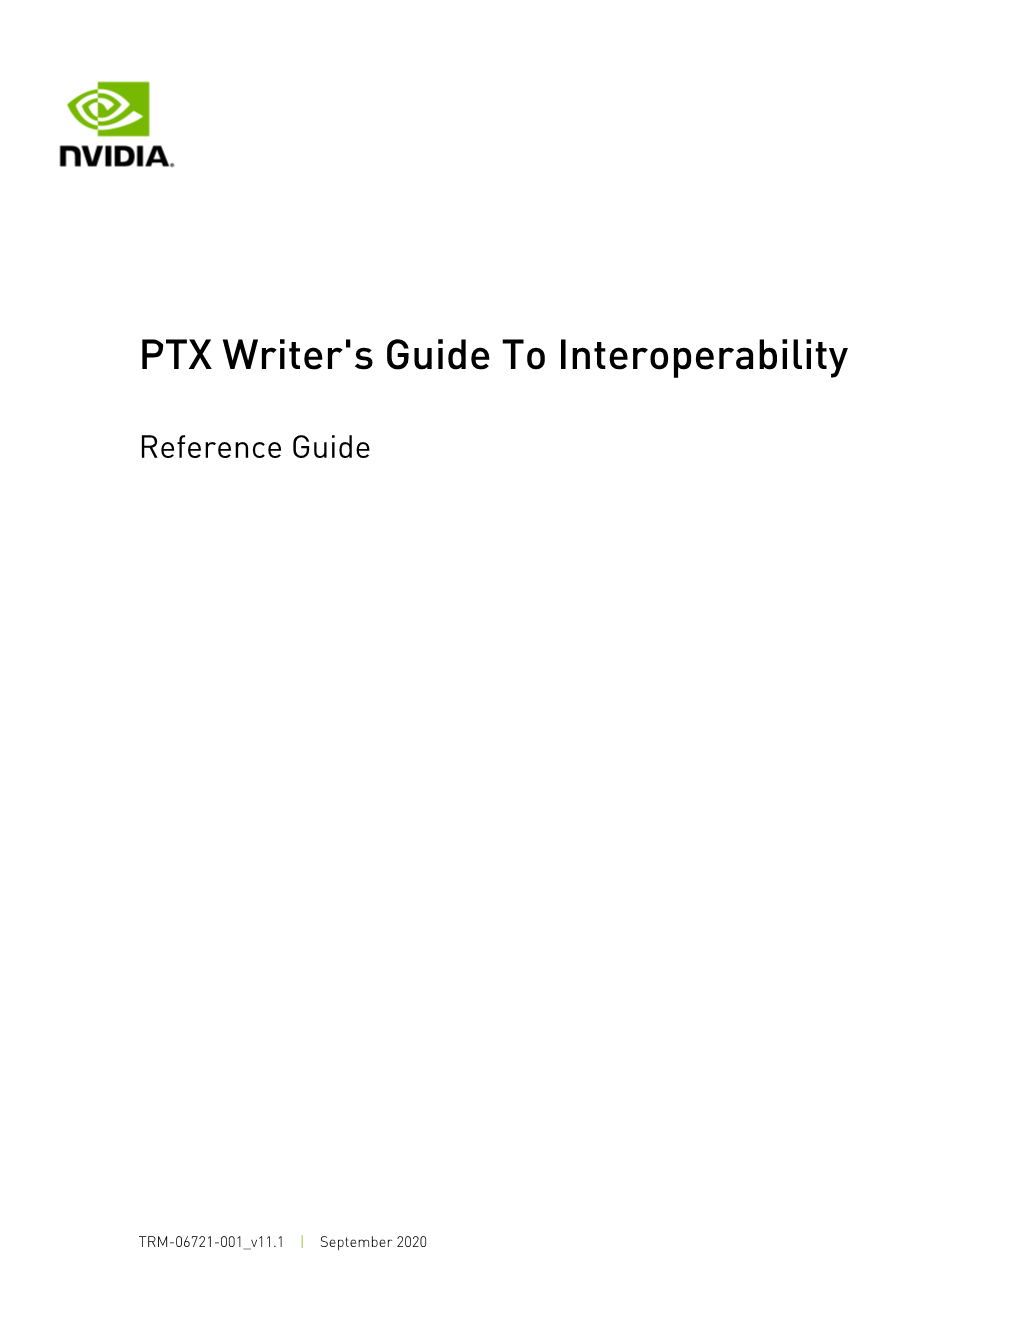 PTX Writer's Guide to Interoperability